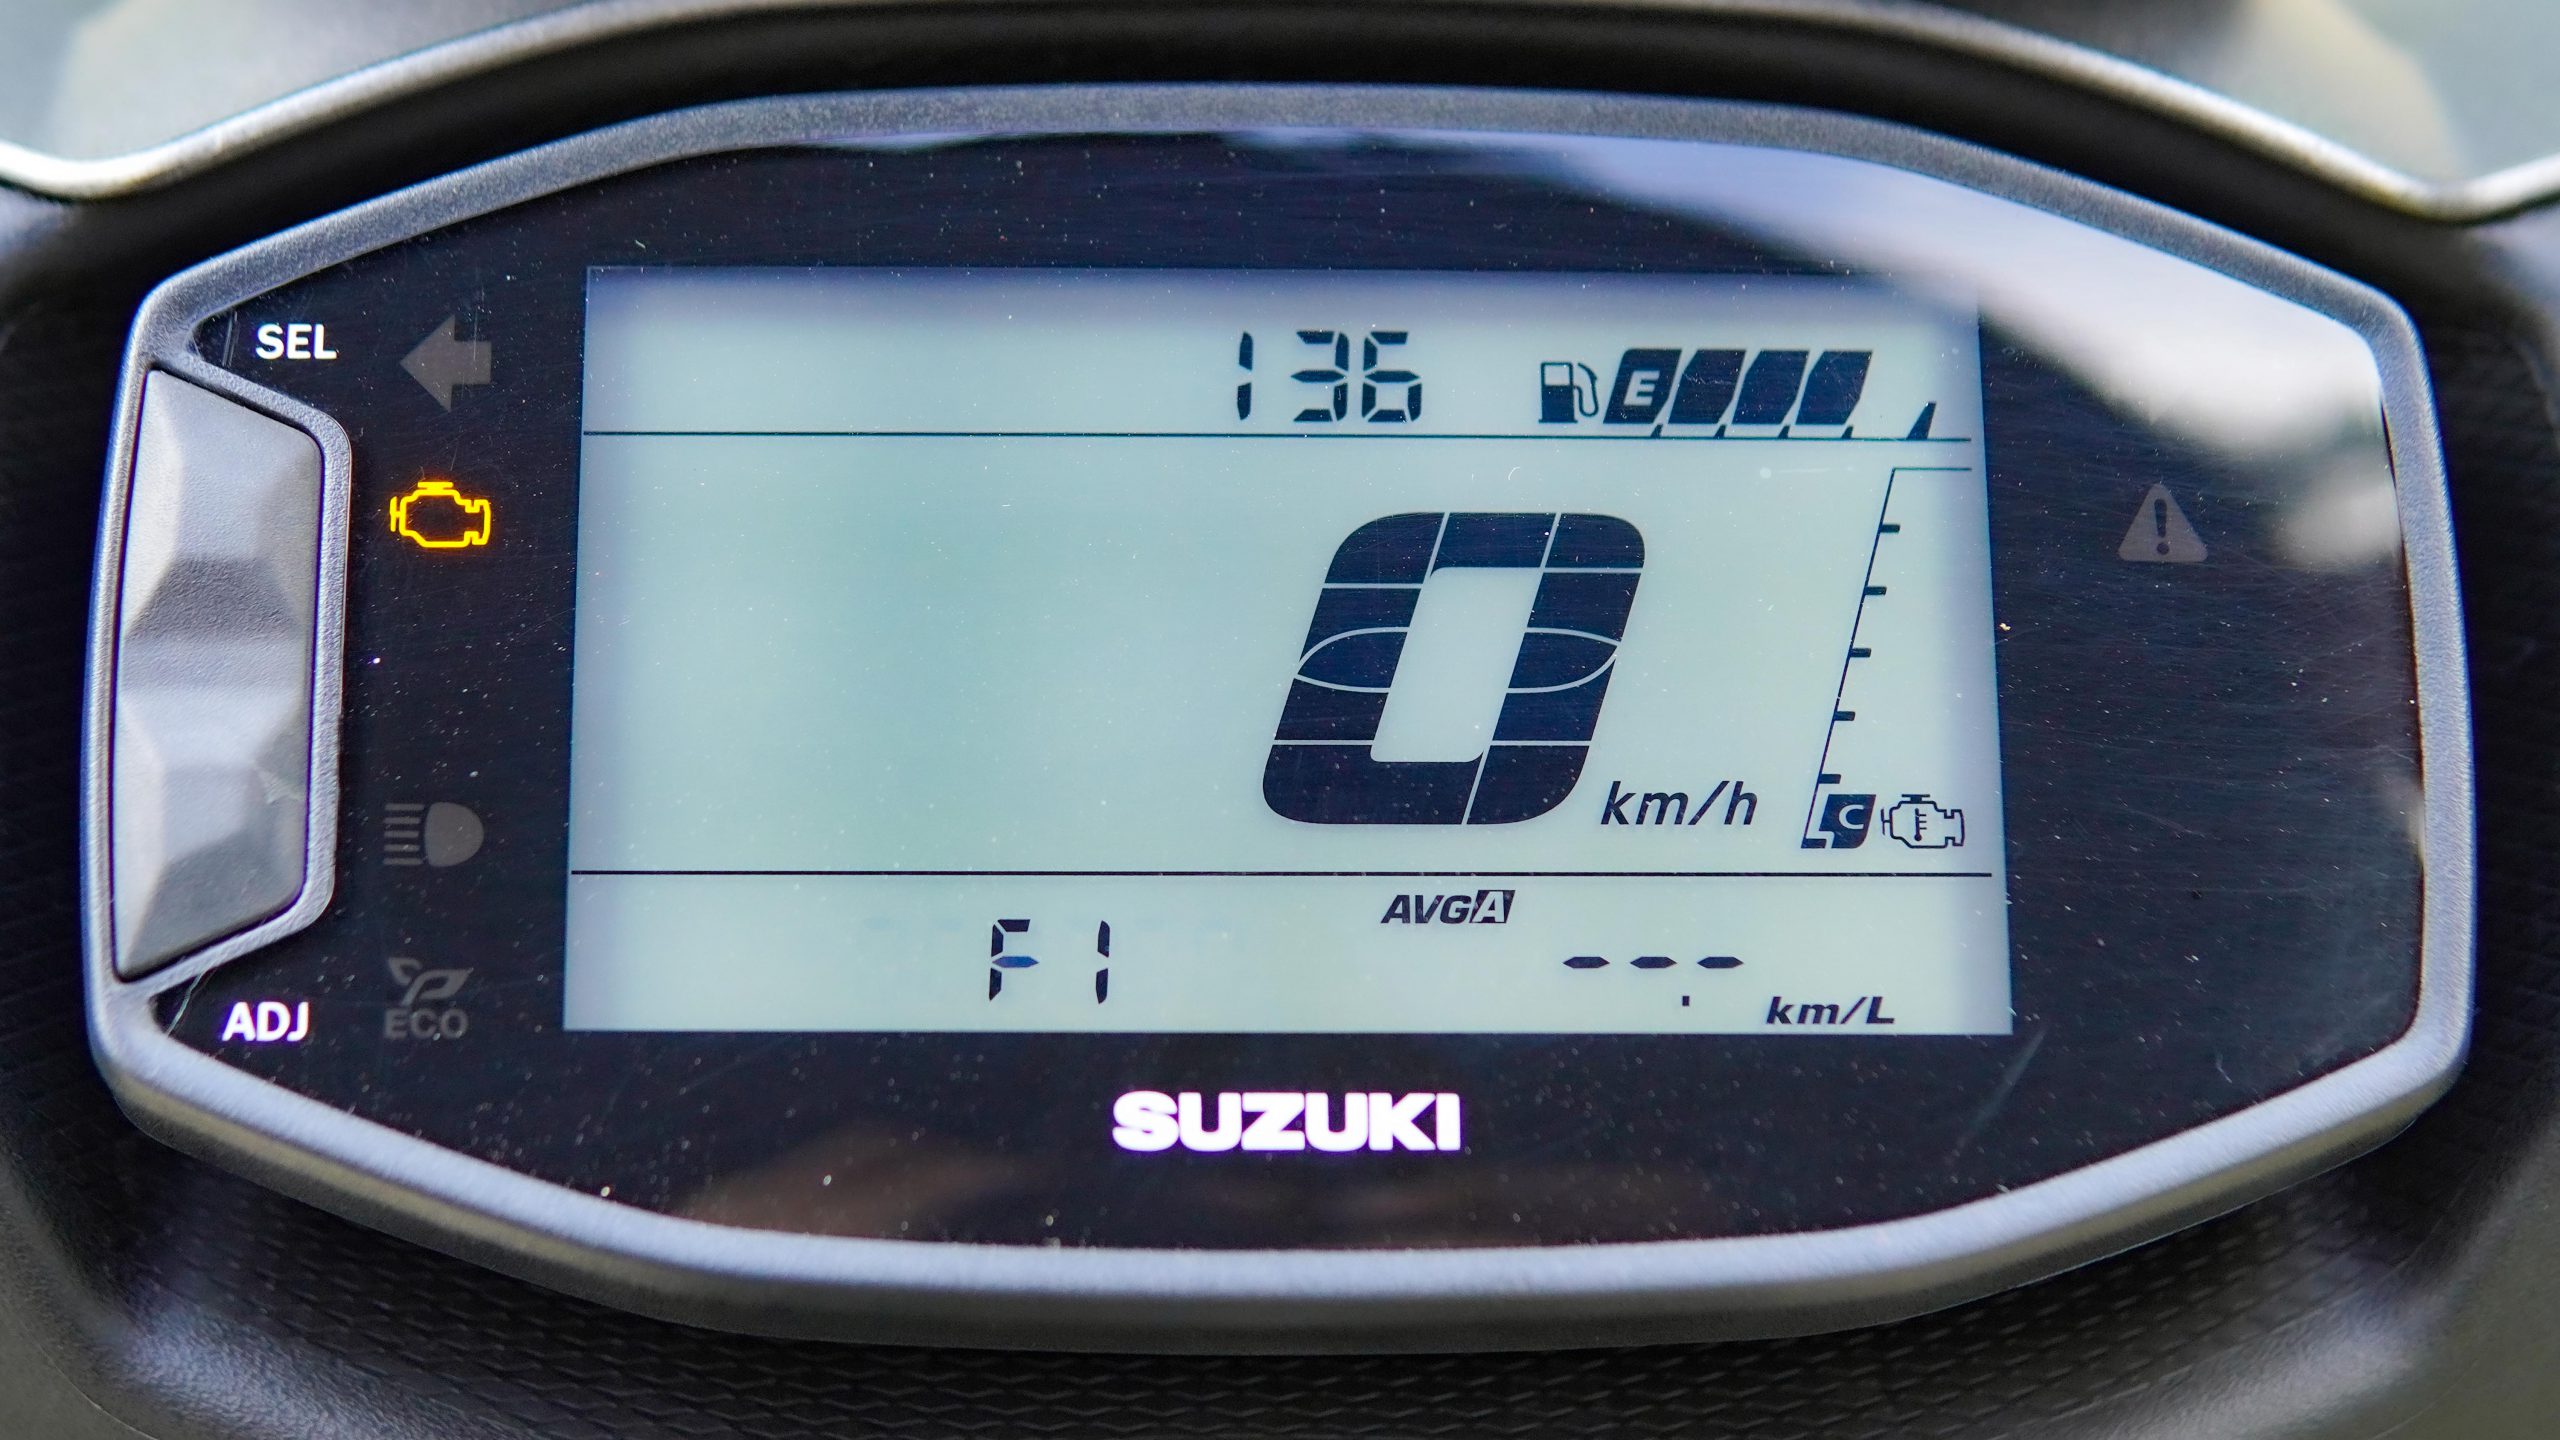 Standard Digital Meter in Suzuki Avenis